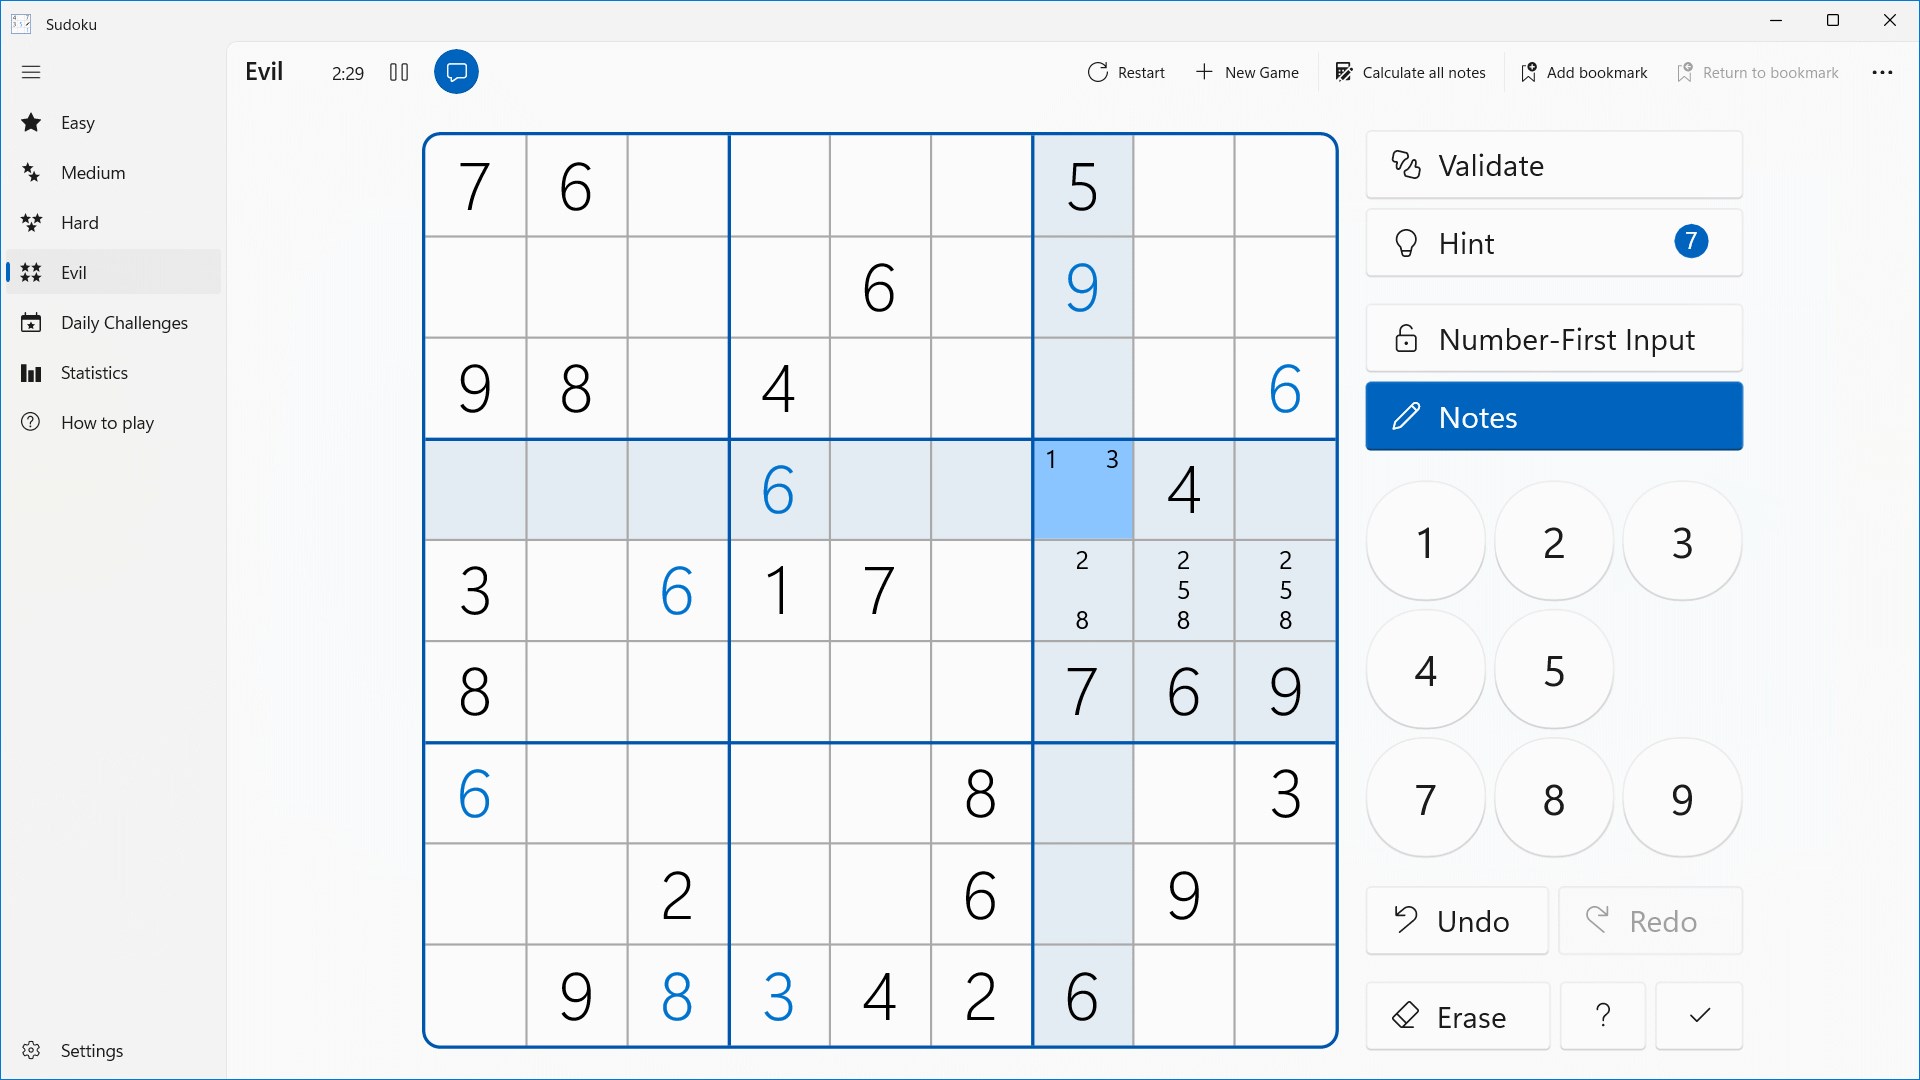 Obter Sudoku - Microsoft Store pt-PT